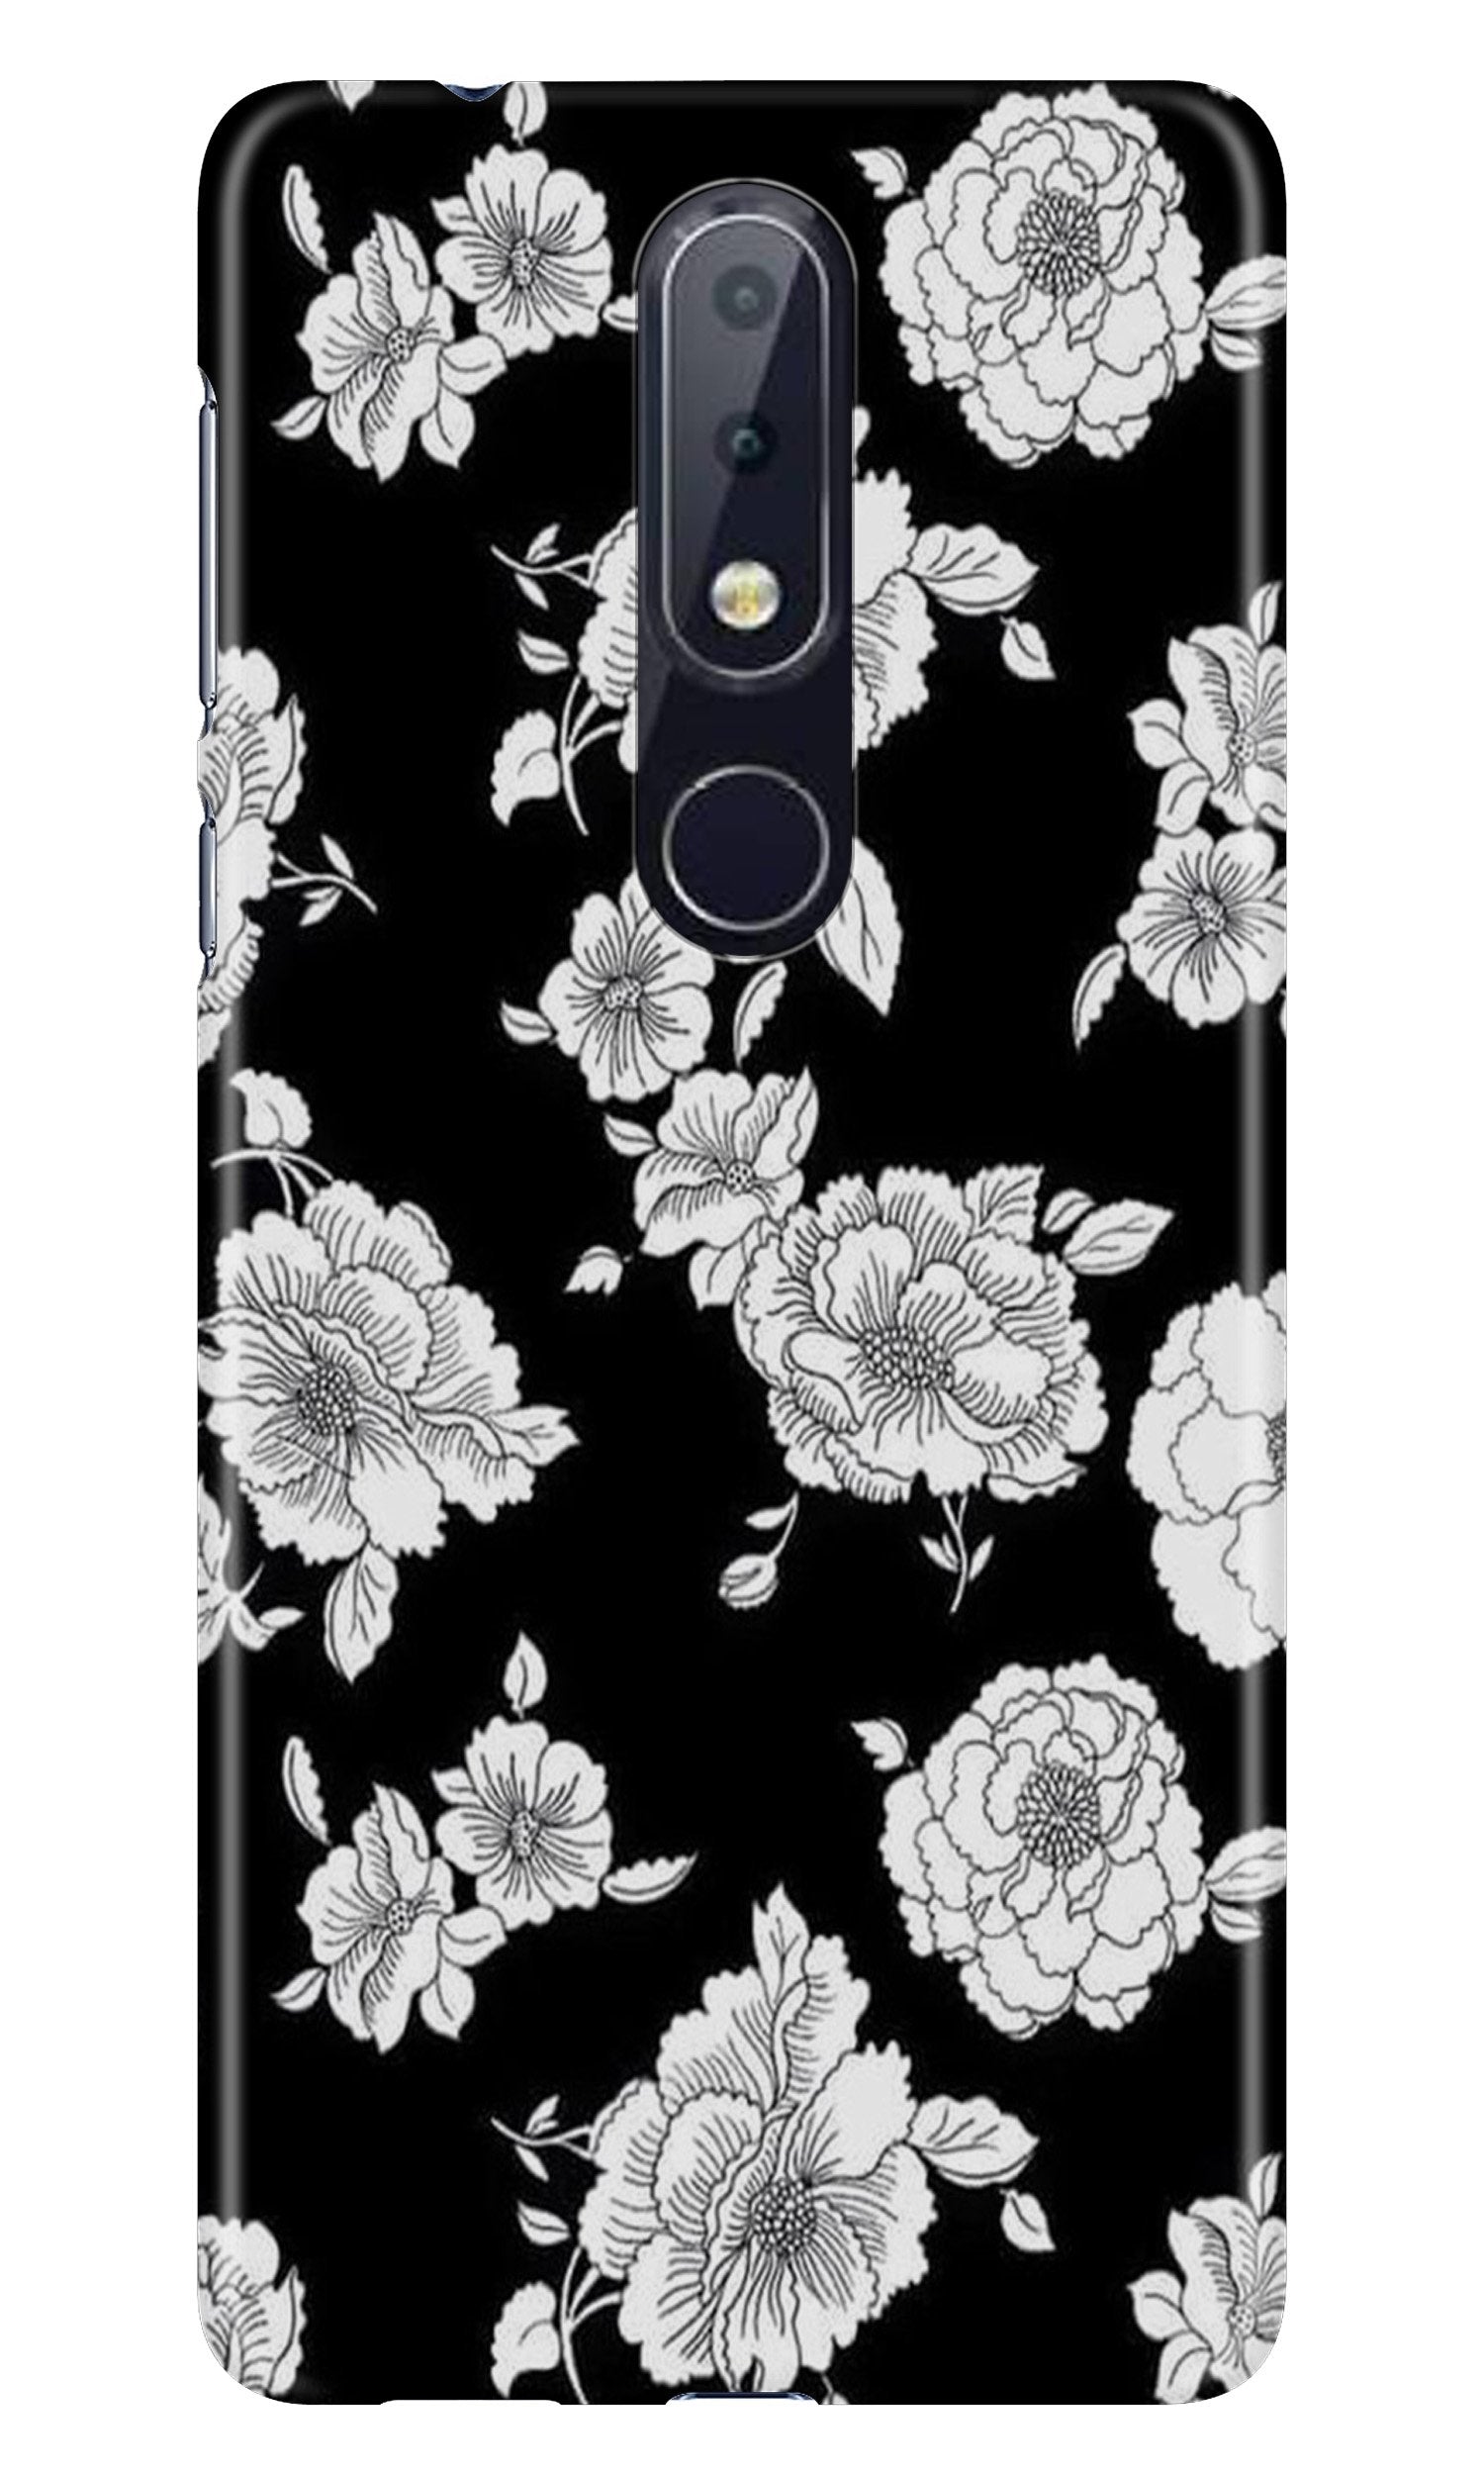 White flowers Black Background Case for Nokia 4.2